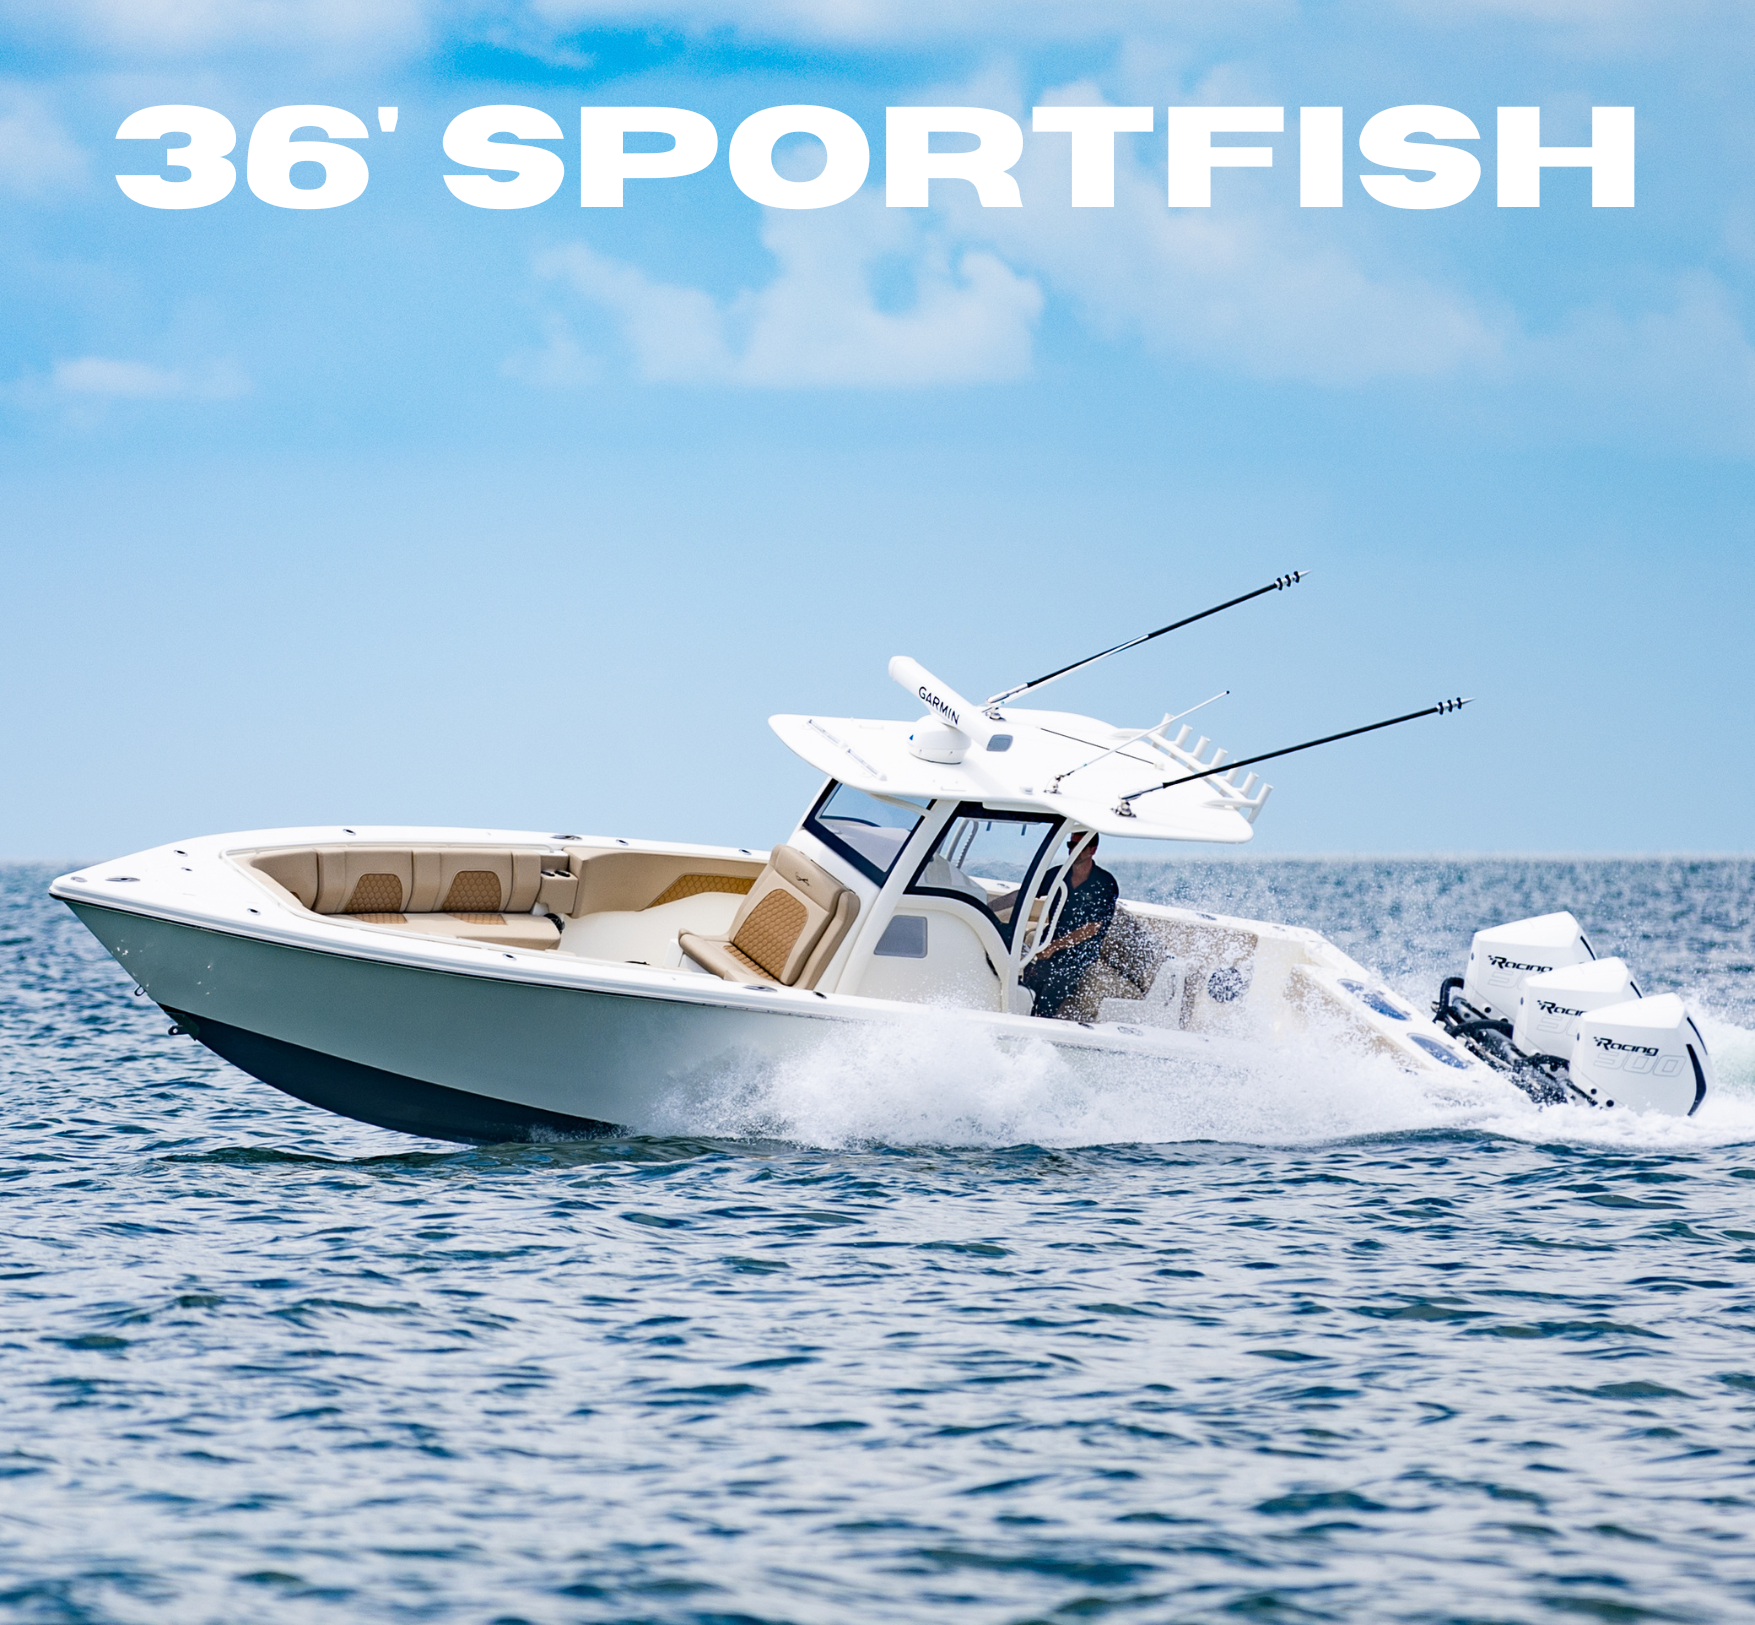 43' Sportfish (1)